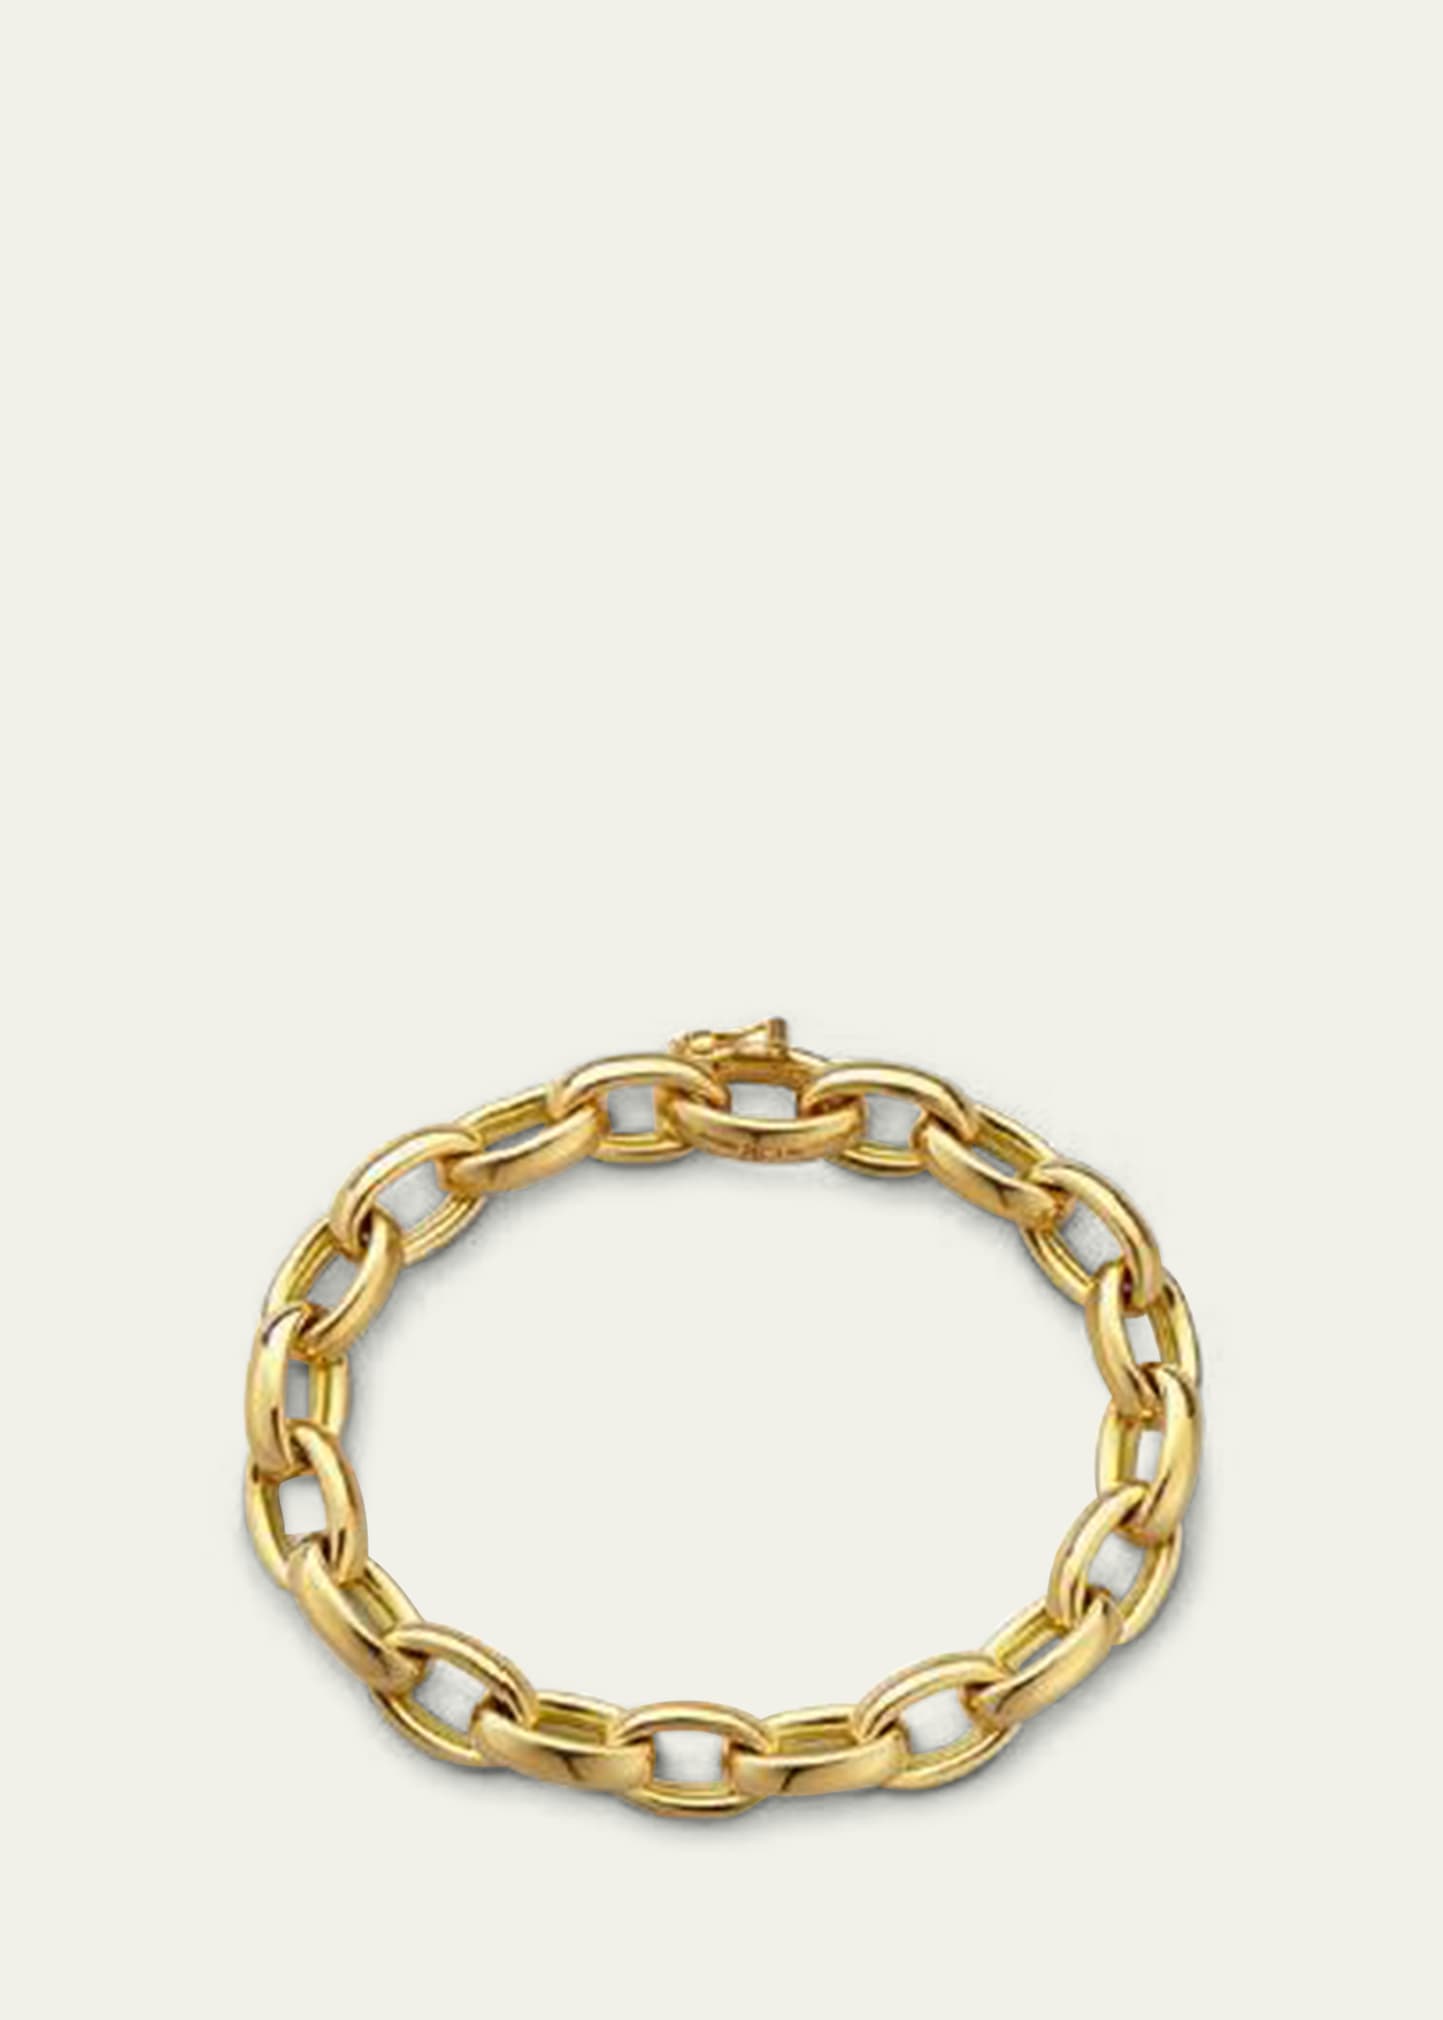 18K Yellow Gold Elizabeth Link Handmade Bracelet, 7.5"L